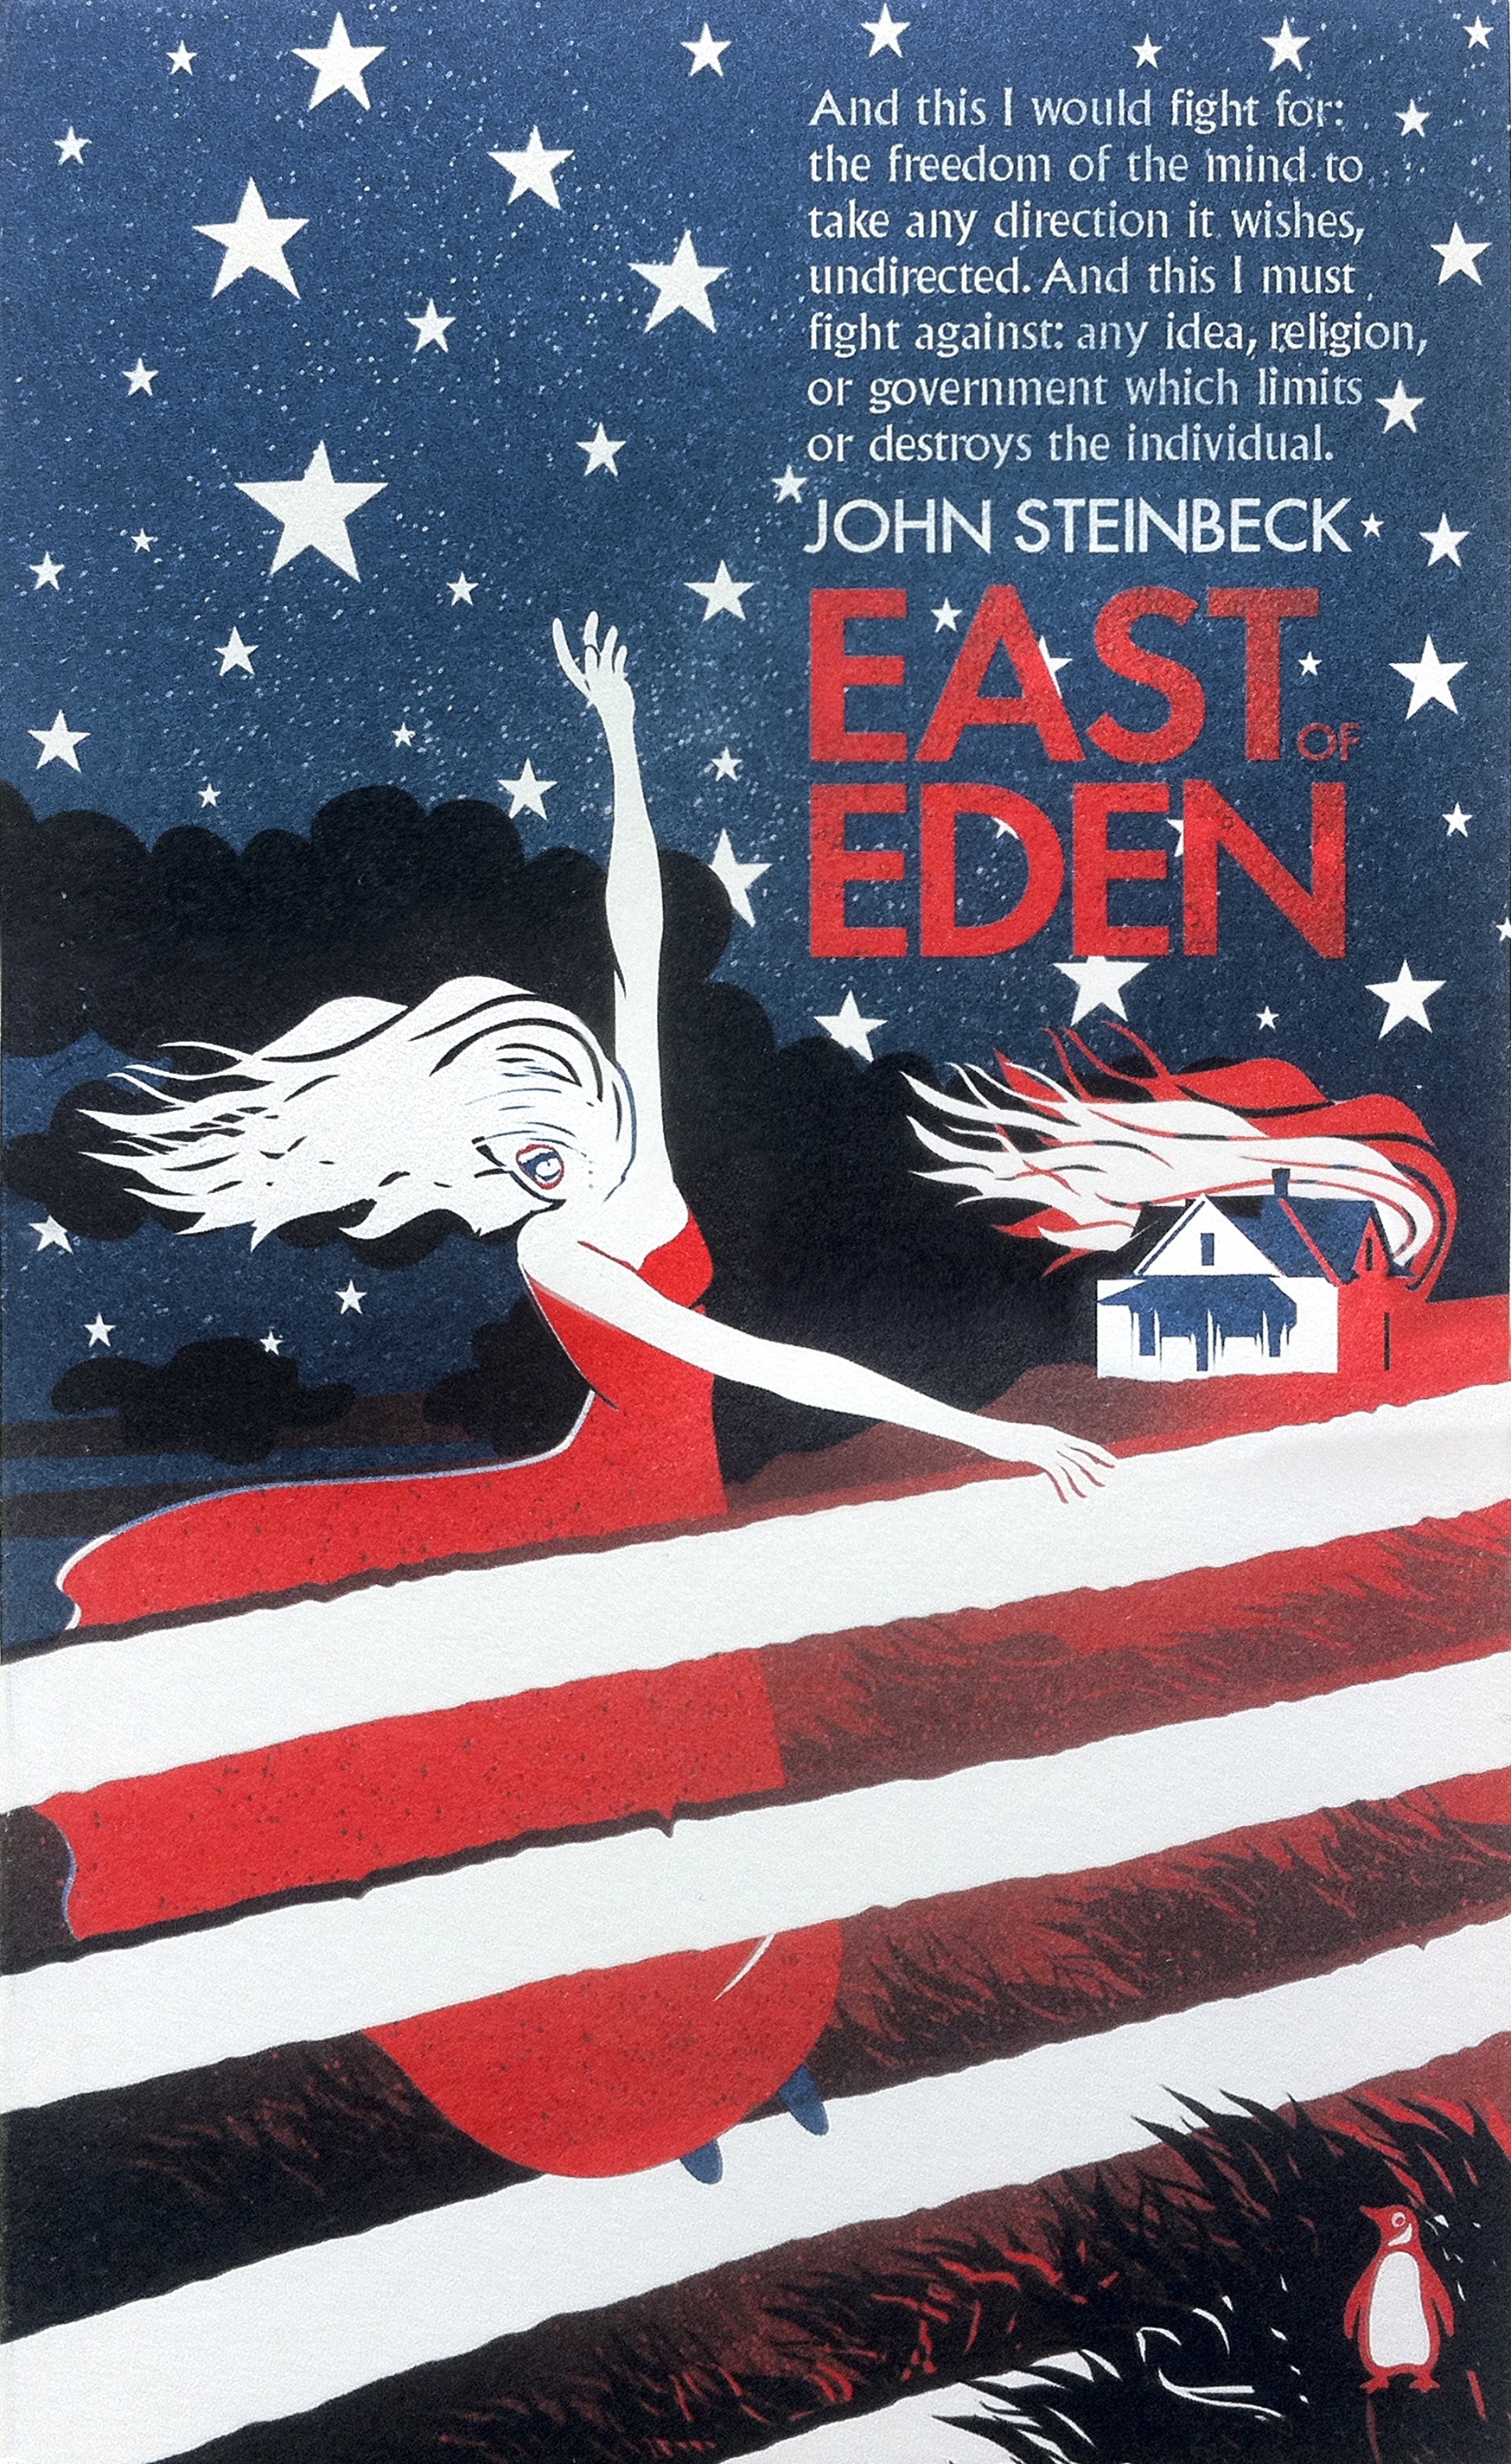 Book “East of Eden” by John Steinbeck, David Wyatt — April 3, 2014